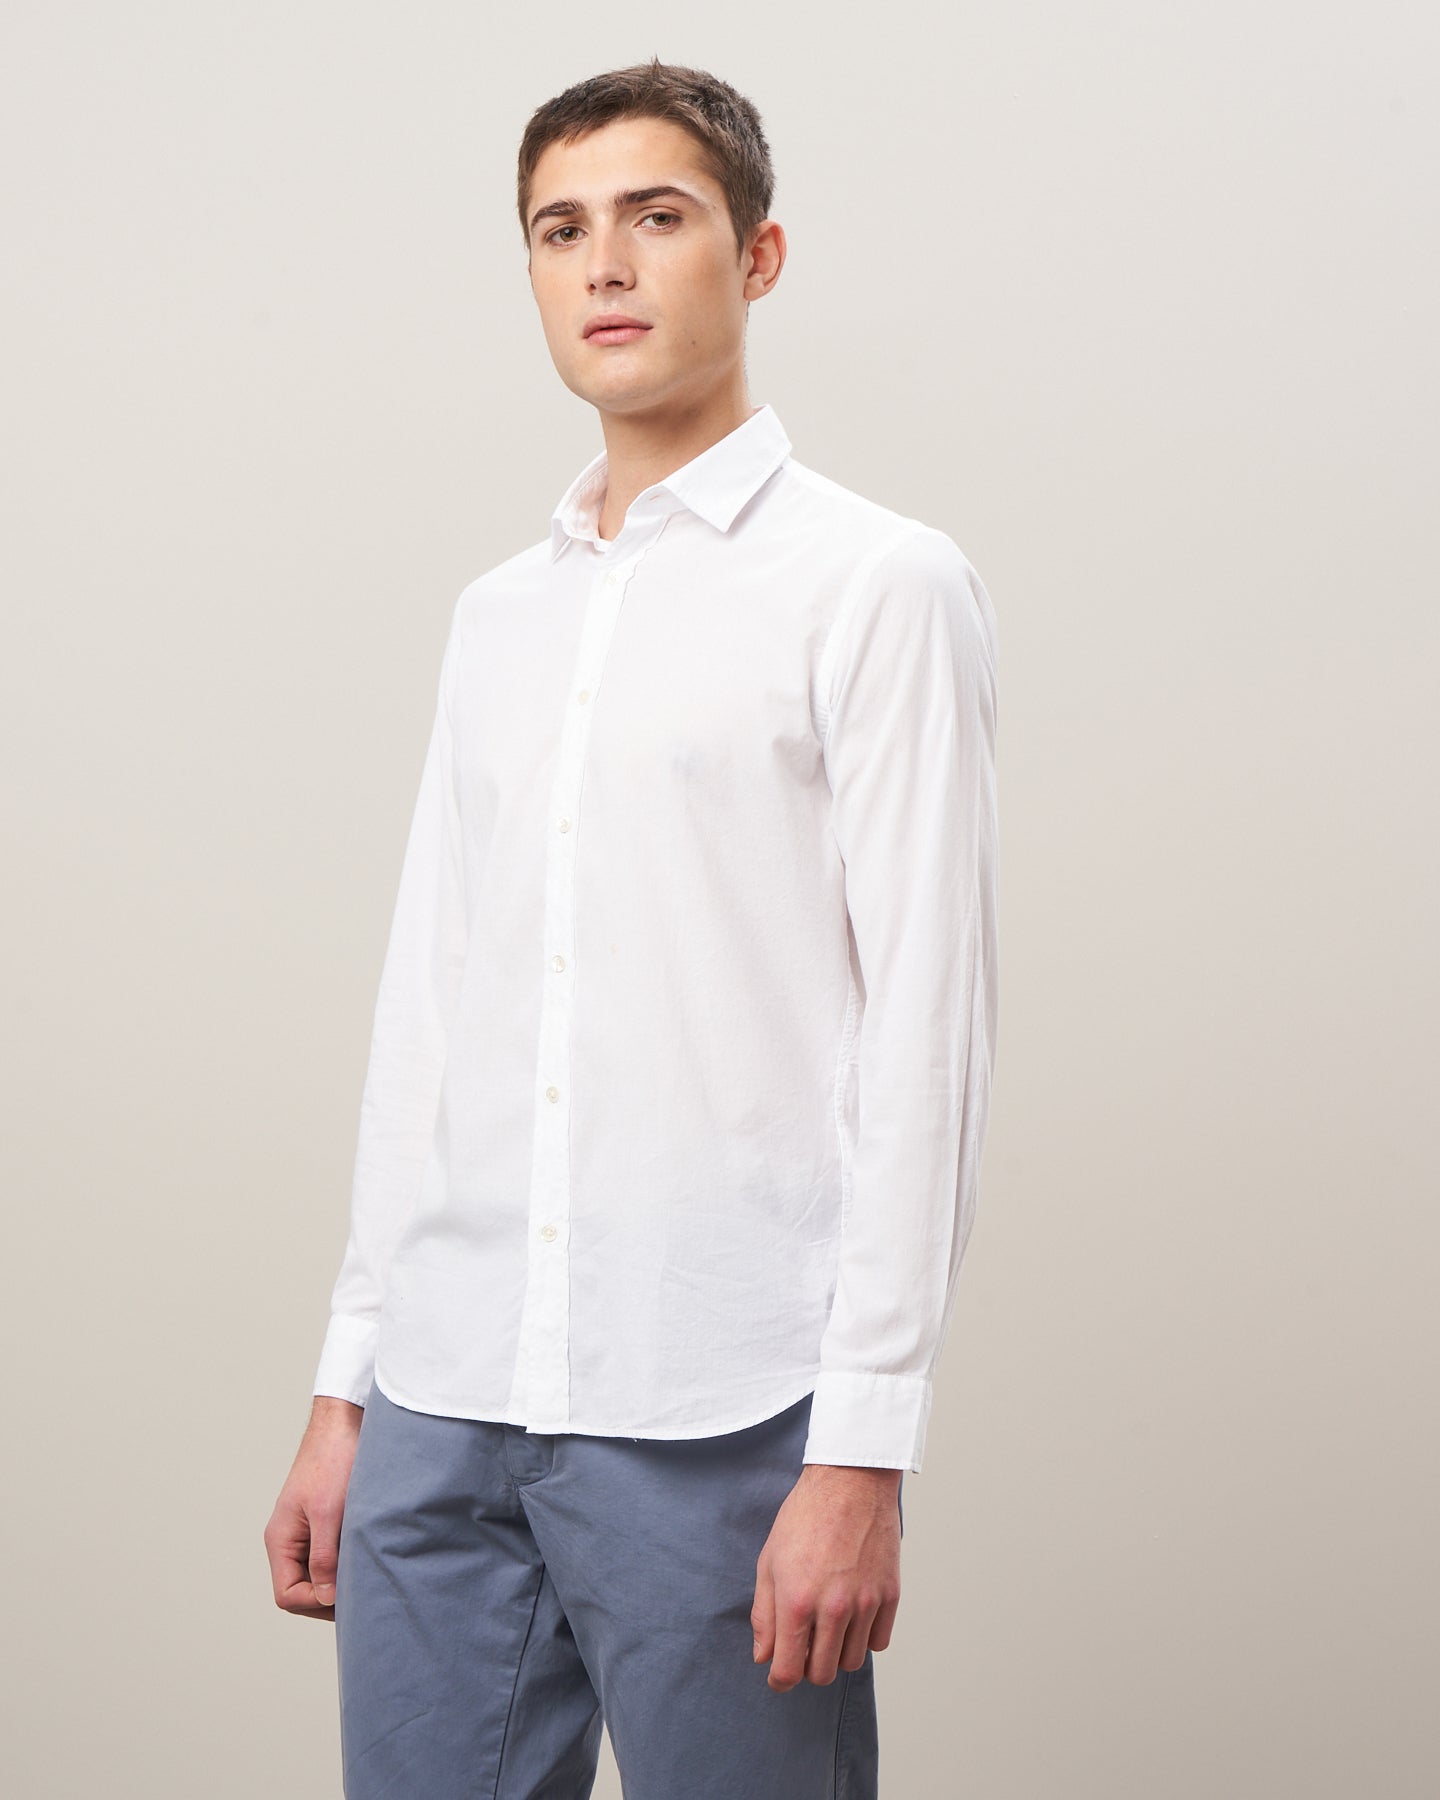 Sammy Men's White Cotton Voile Shirt